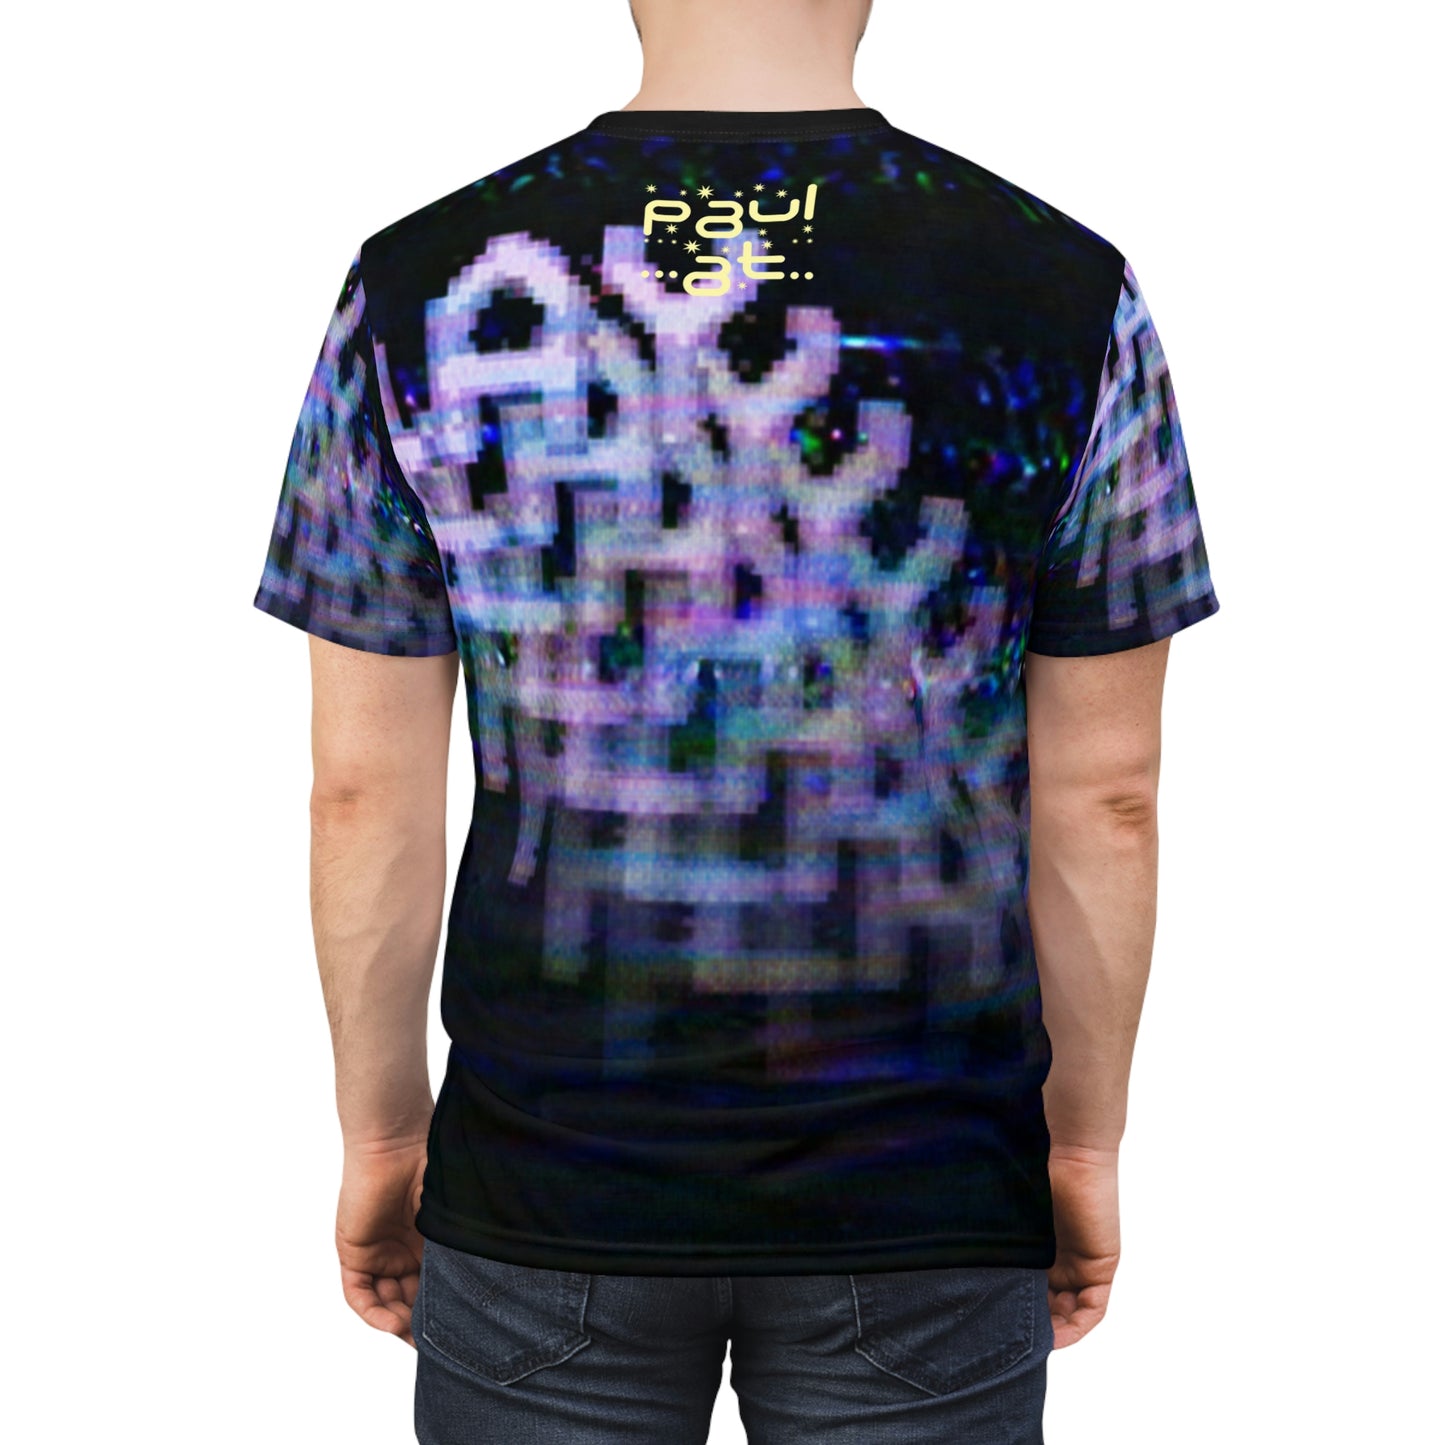 Play Echo Unisex T-Shirt